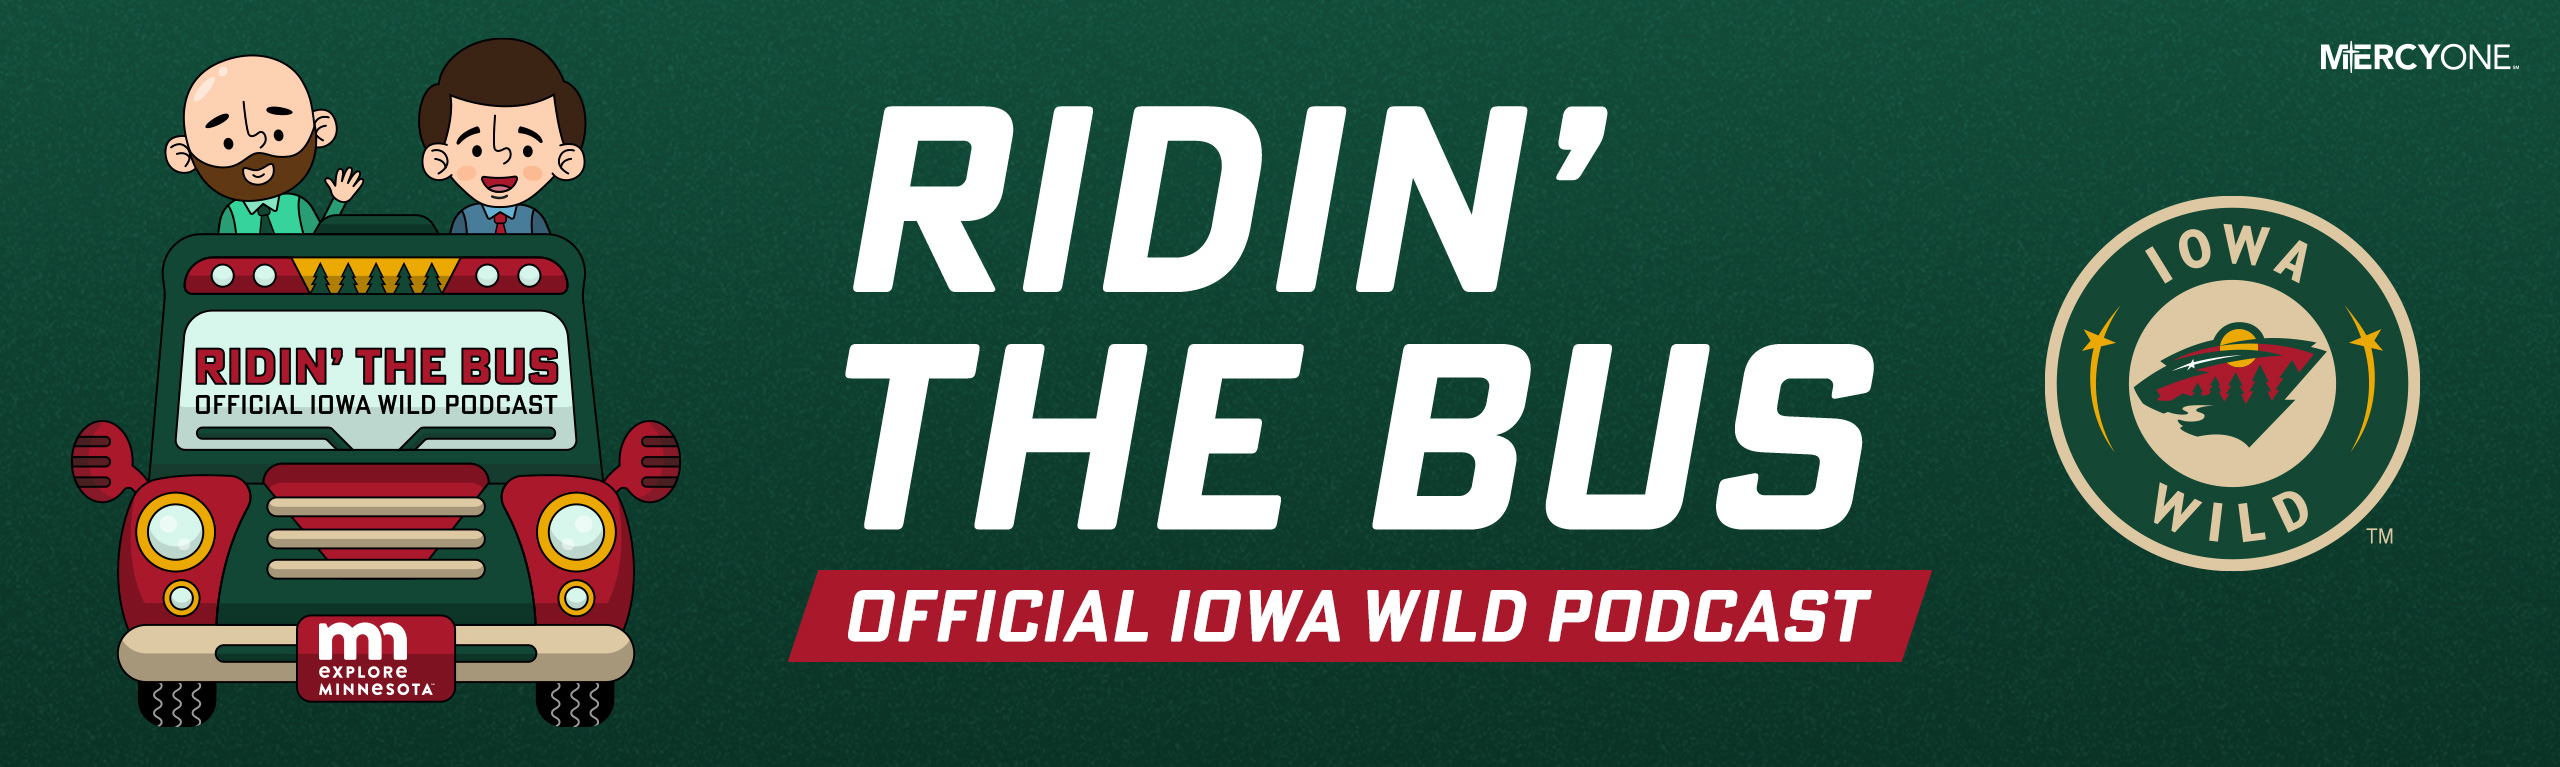 Ridin' The Bus with the Iowa Wild